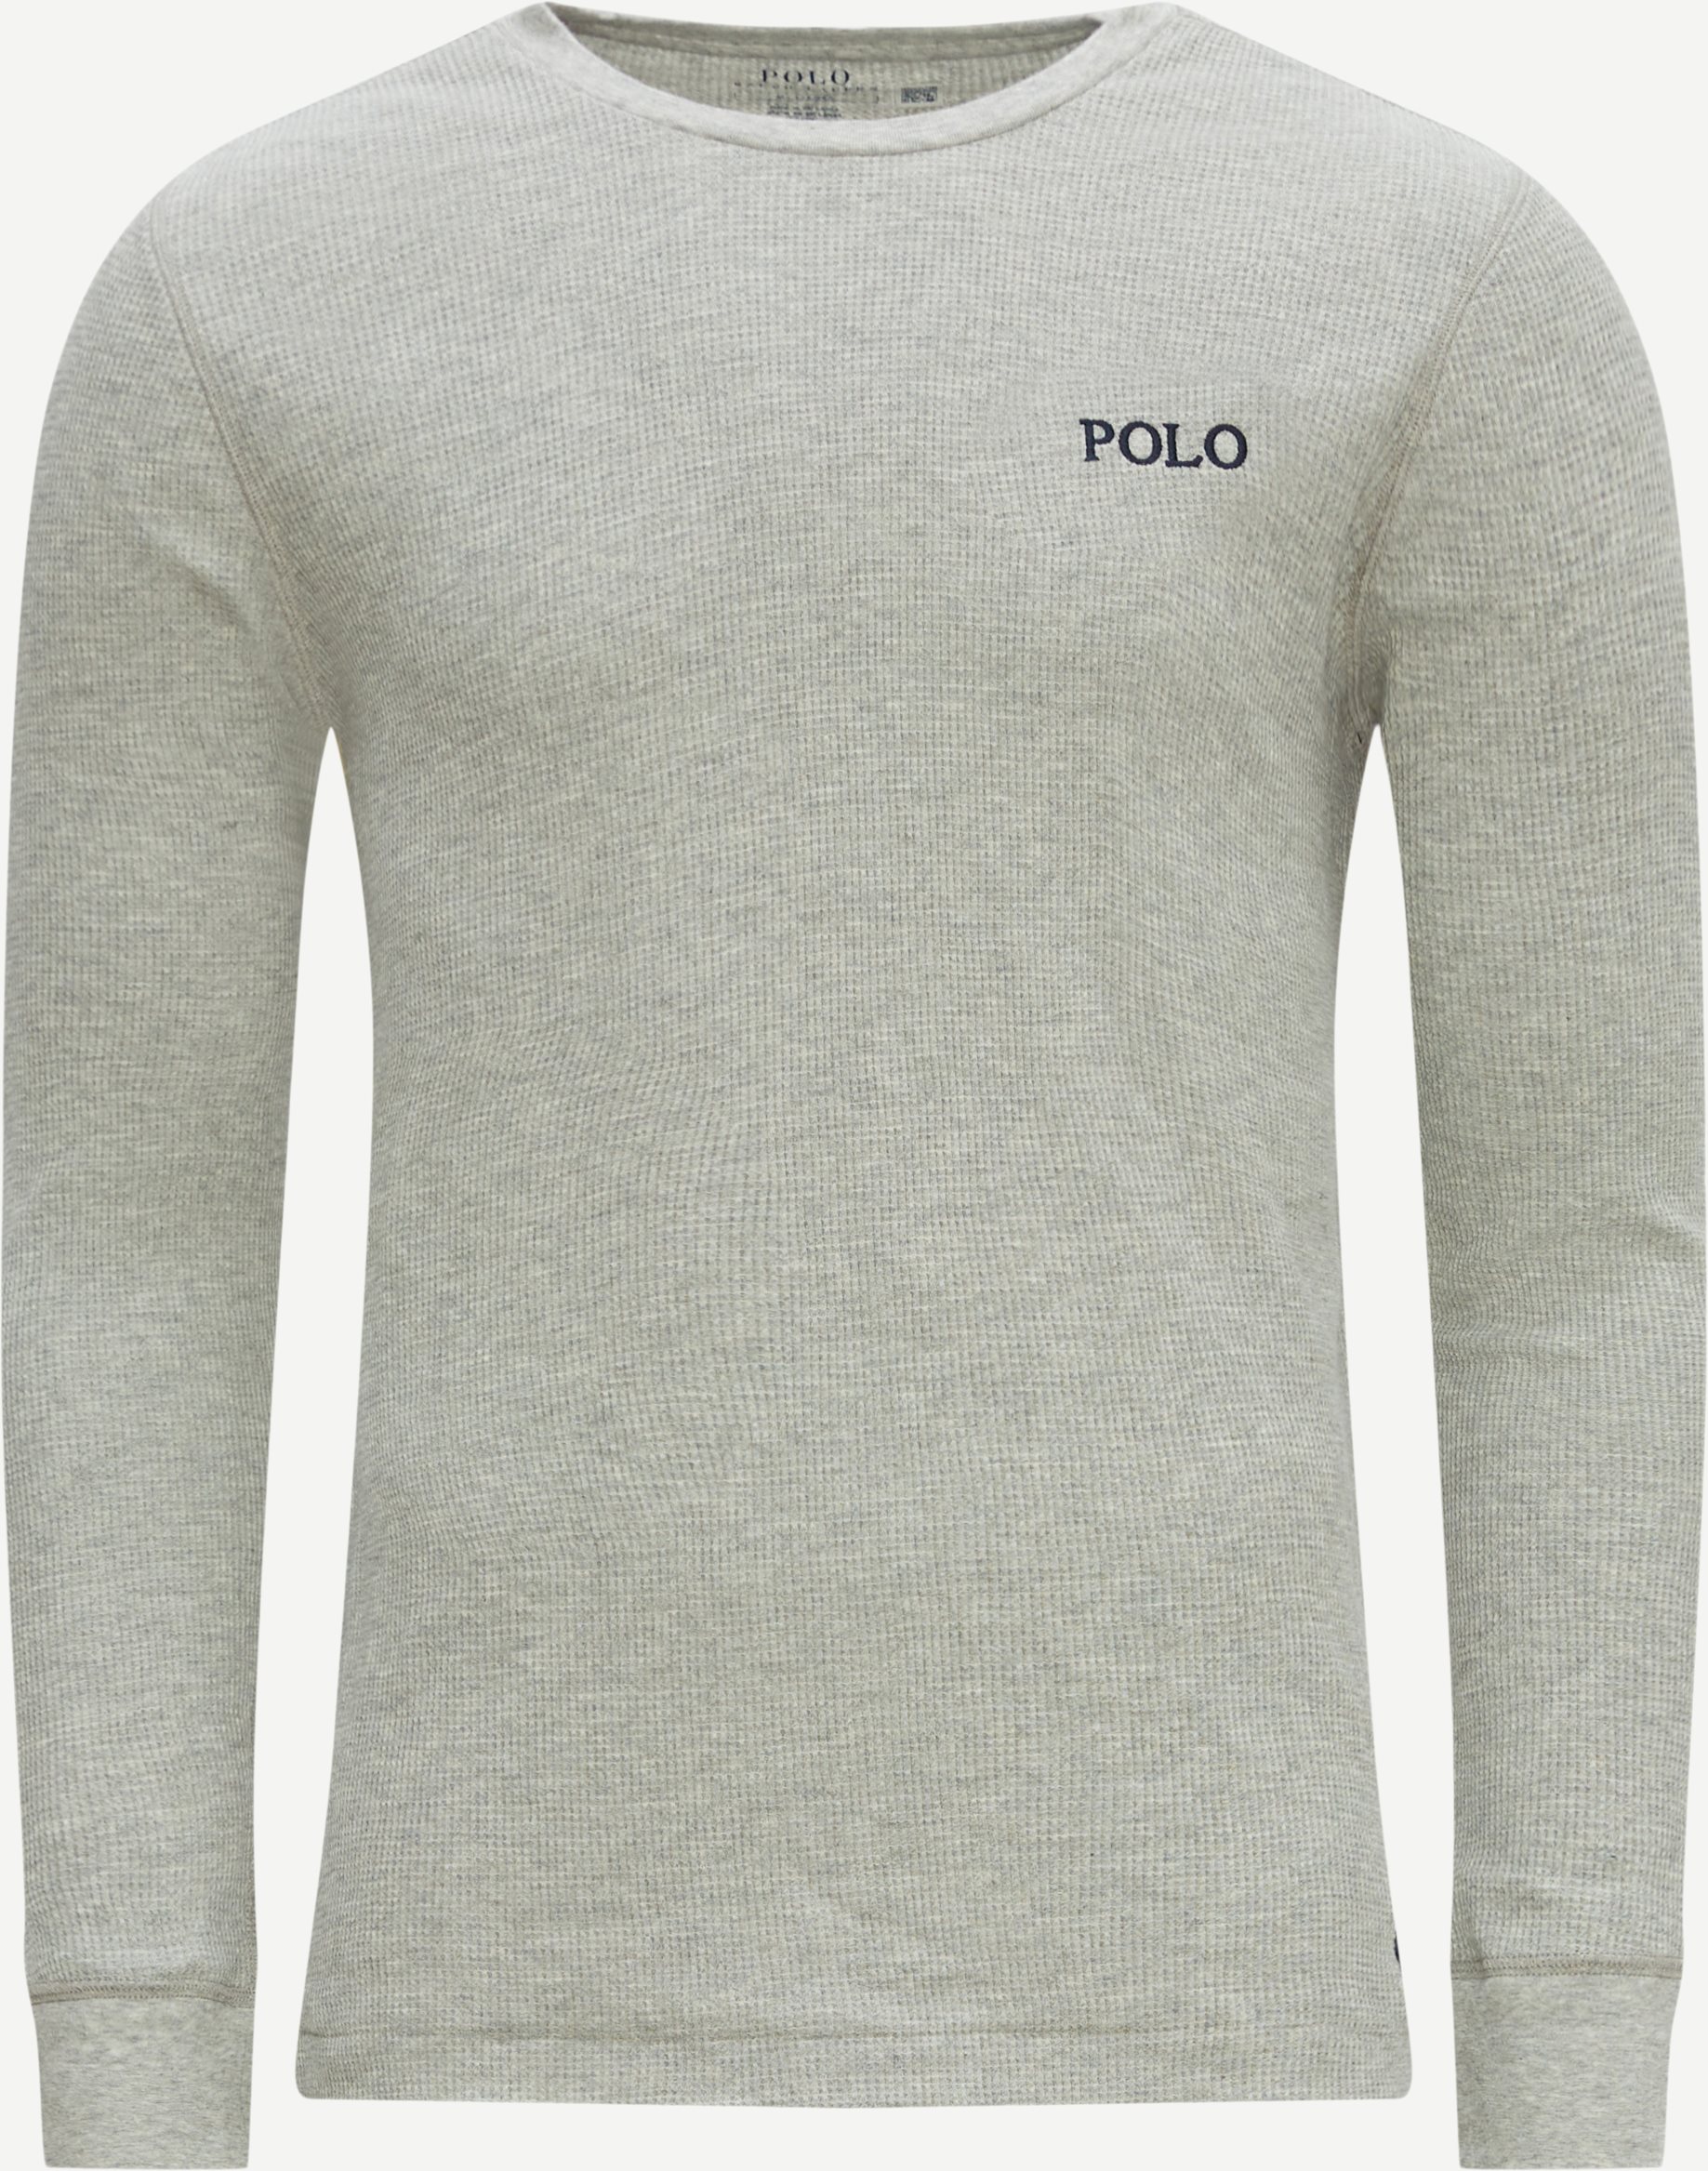 Polo Ralph Lauren T-shirts 714899615 Grey